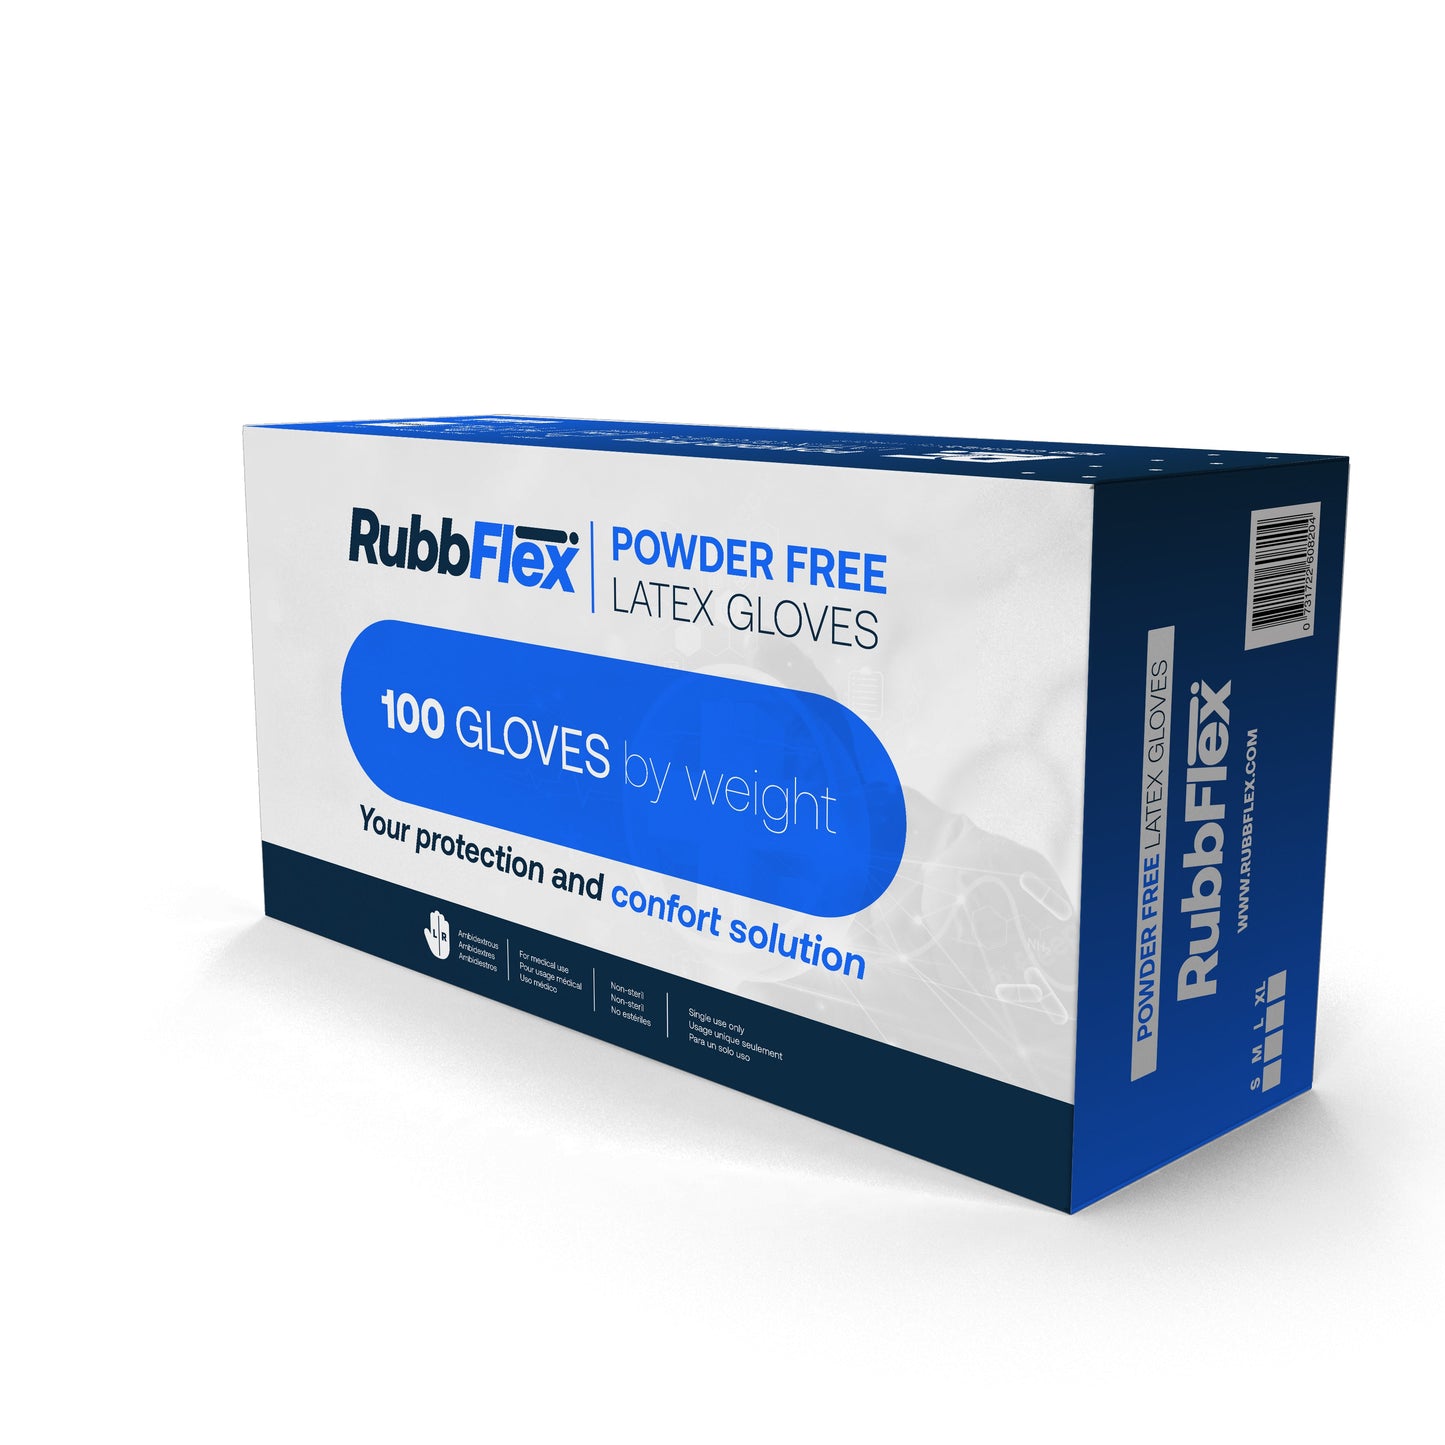 Rubbflex Latex Powder Free Disposable Gloves RLX100M - Medical Exam Grade - 3.1 mil Thick (Pack of 100) MEDIUM